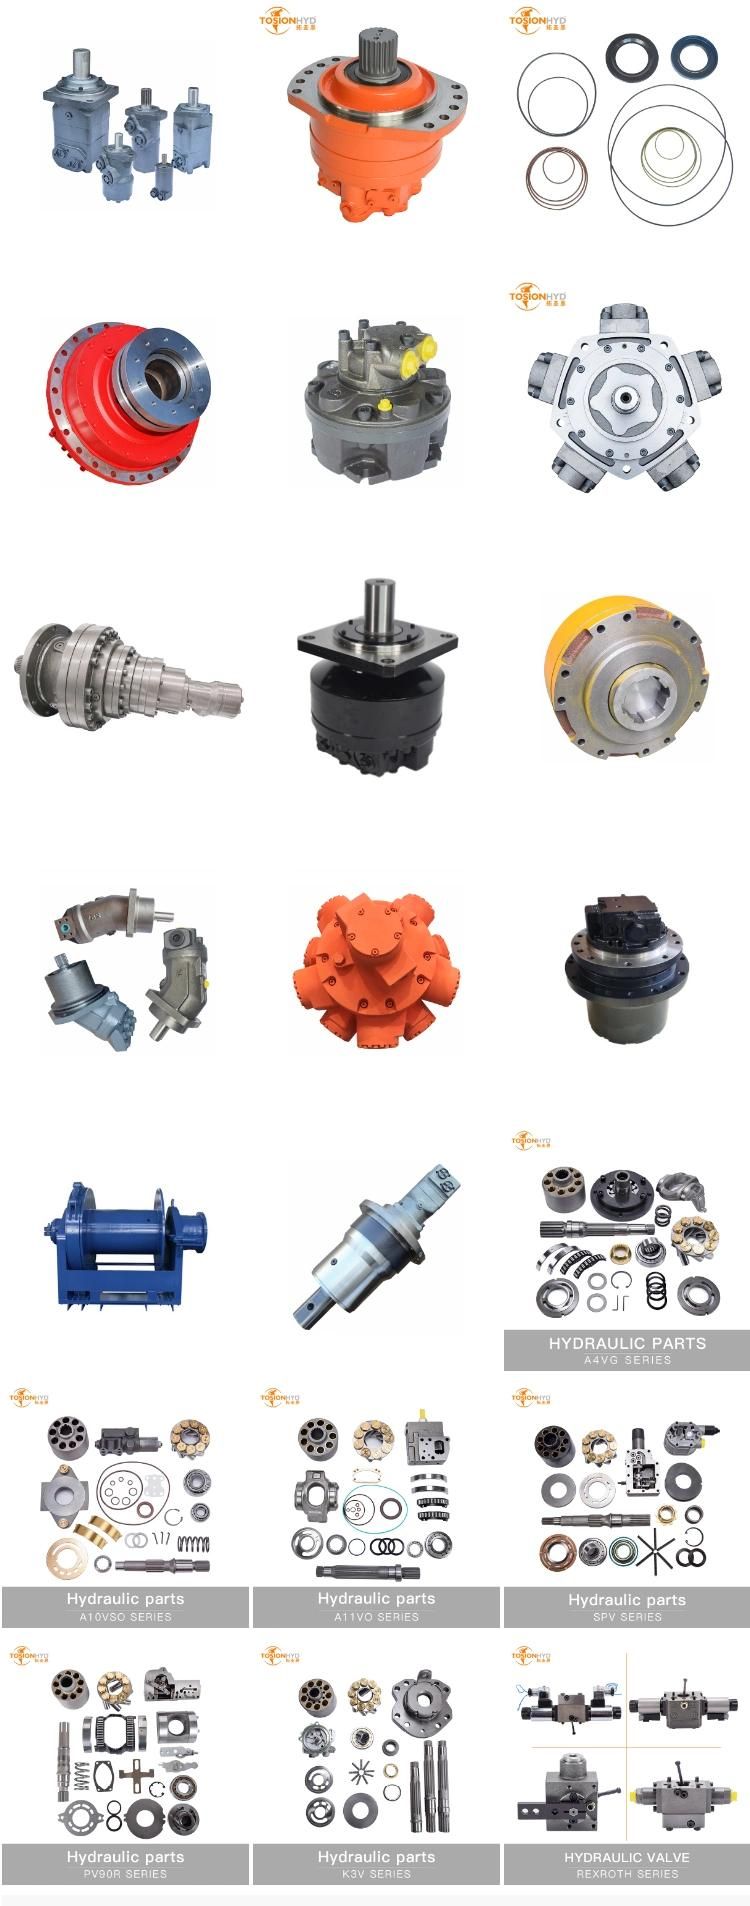 A7V 80 Hydraulic Pump Parts with Rexroth Spare Repair Kits